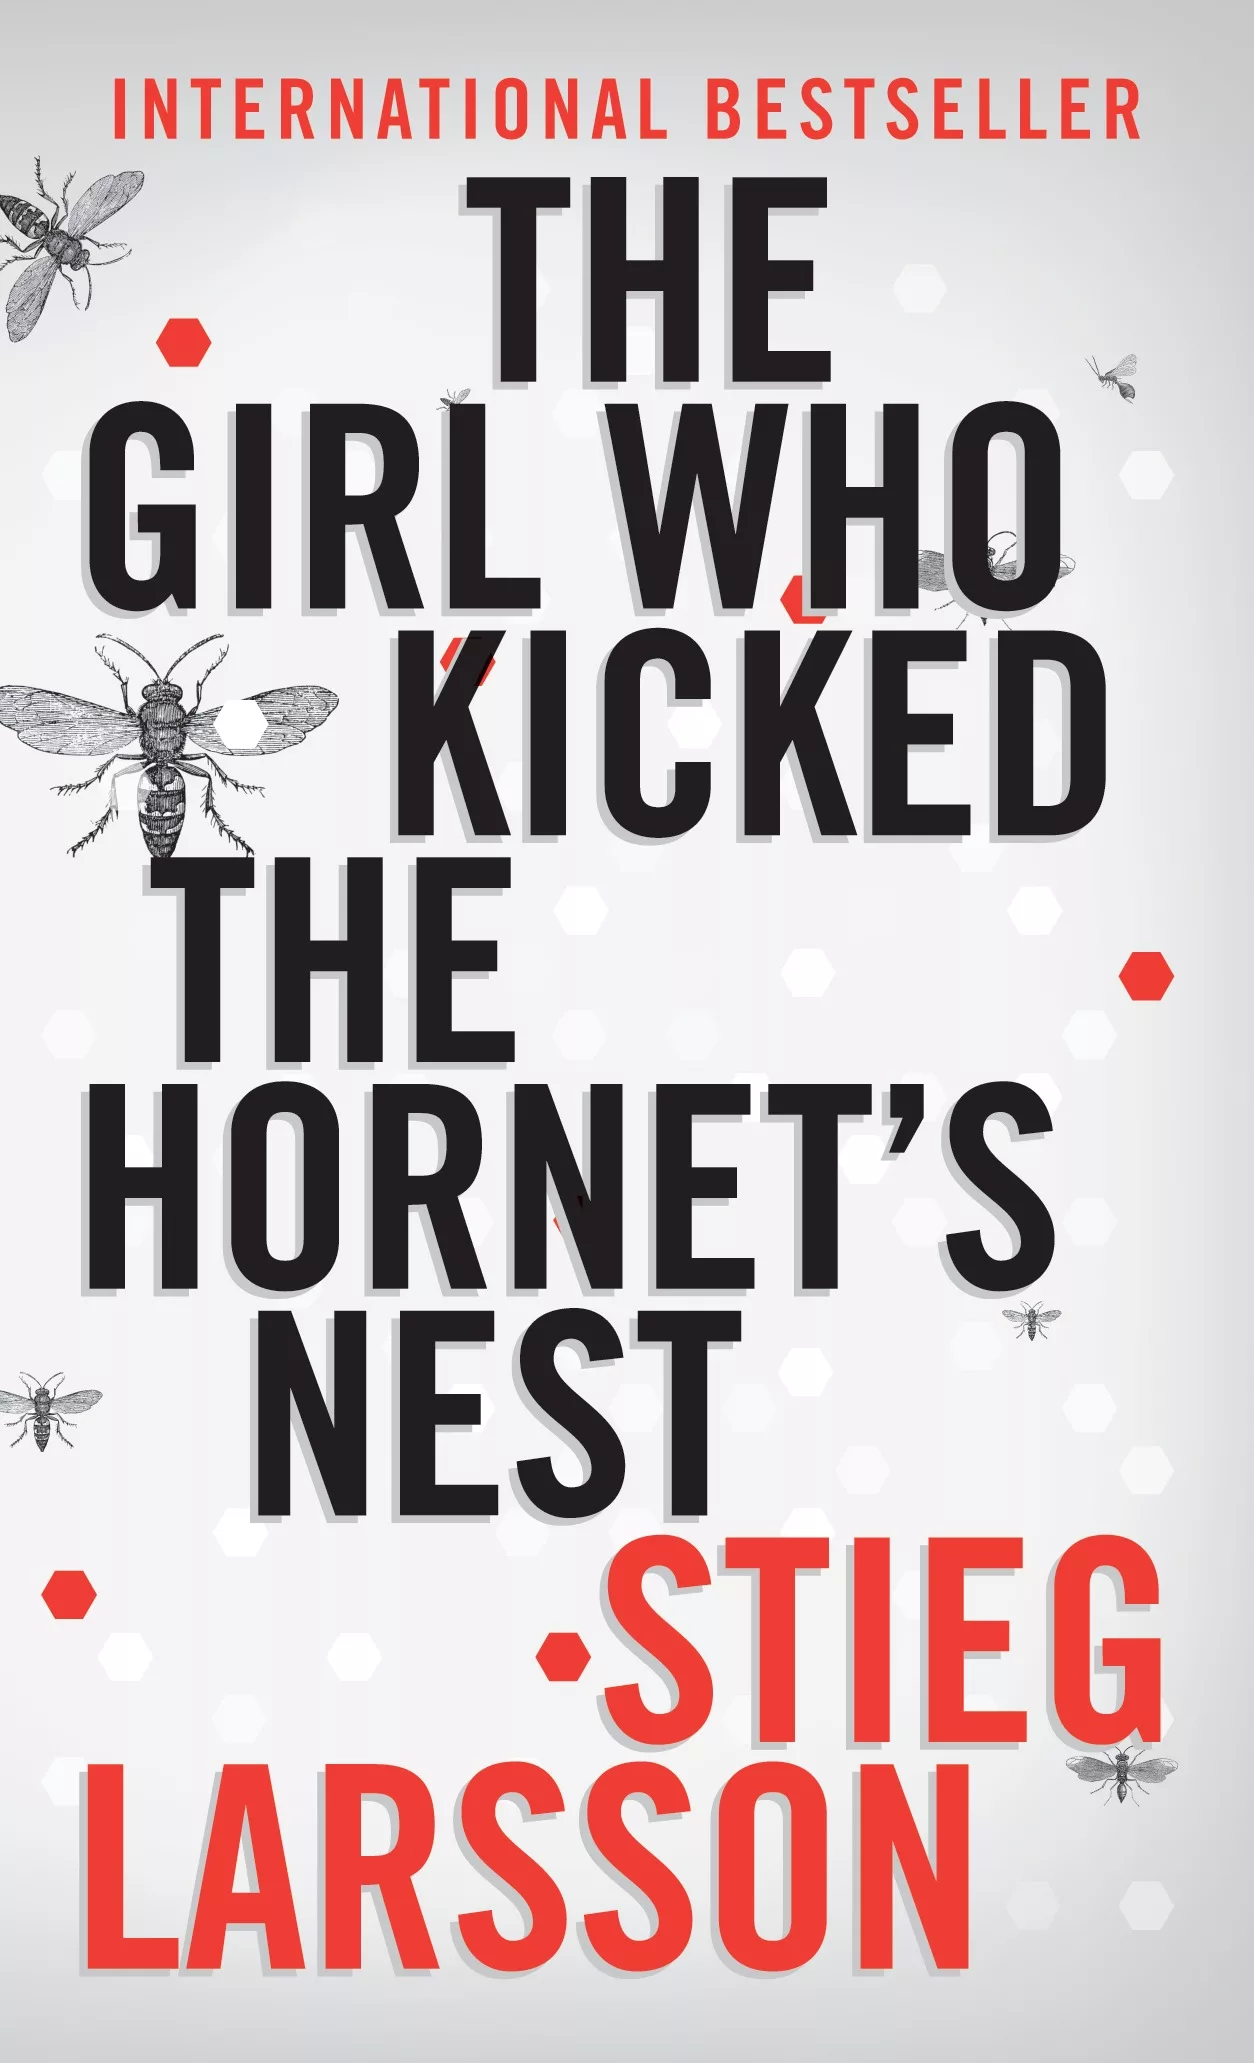 The Girl Who Kicked the Hornet’s Nest